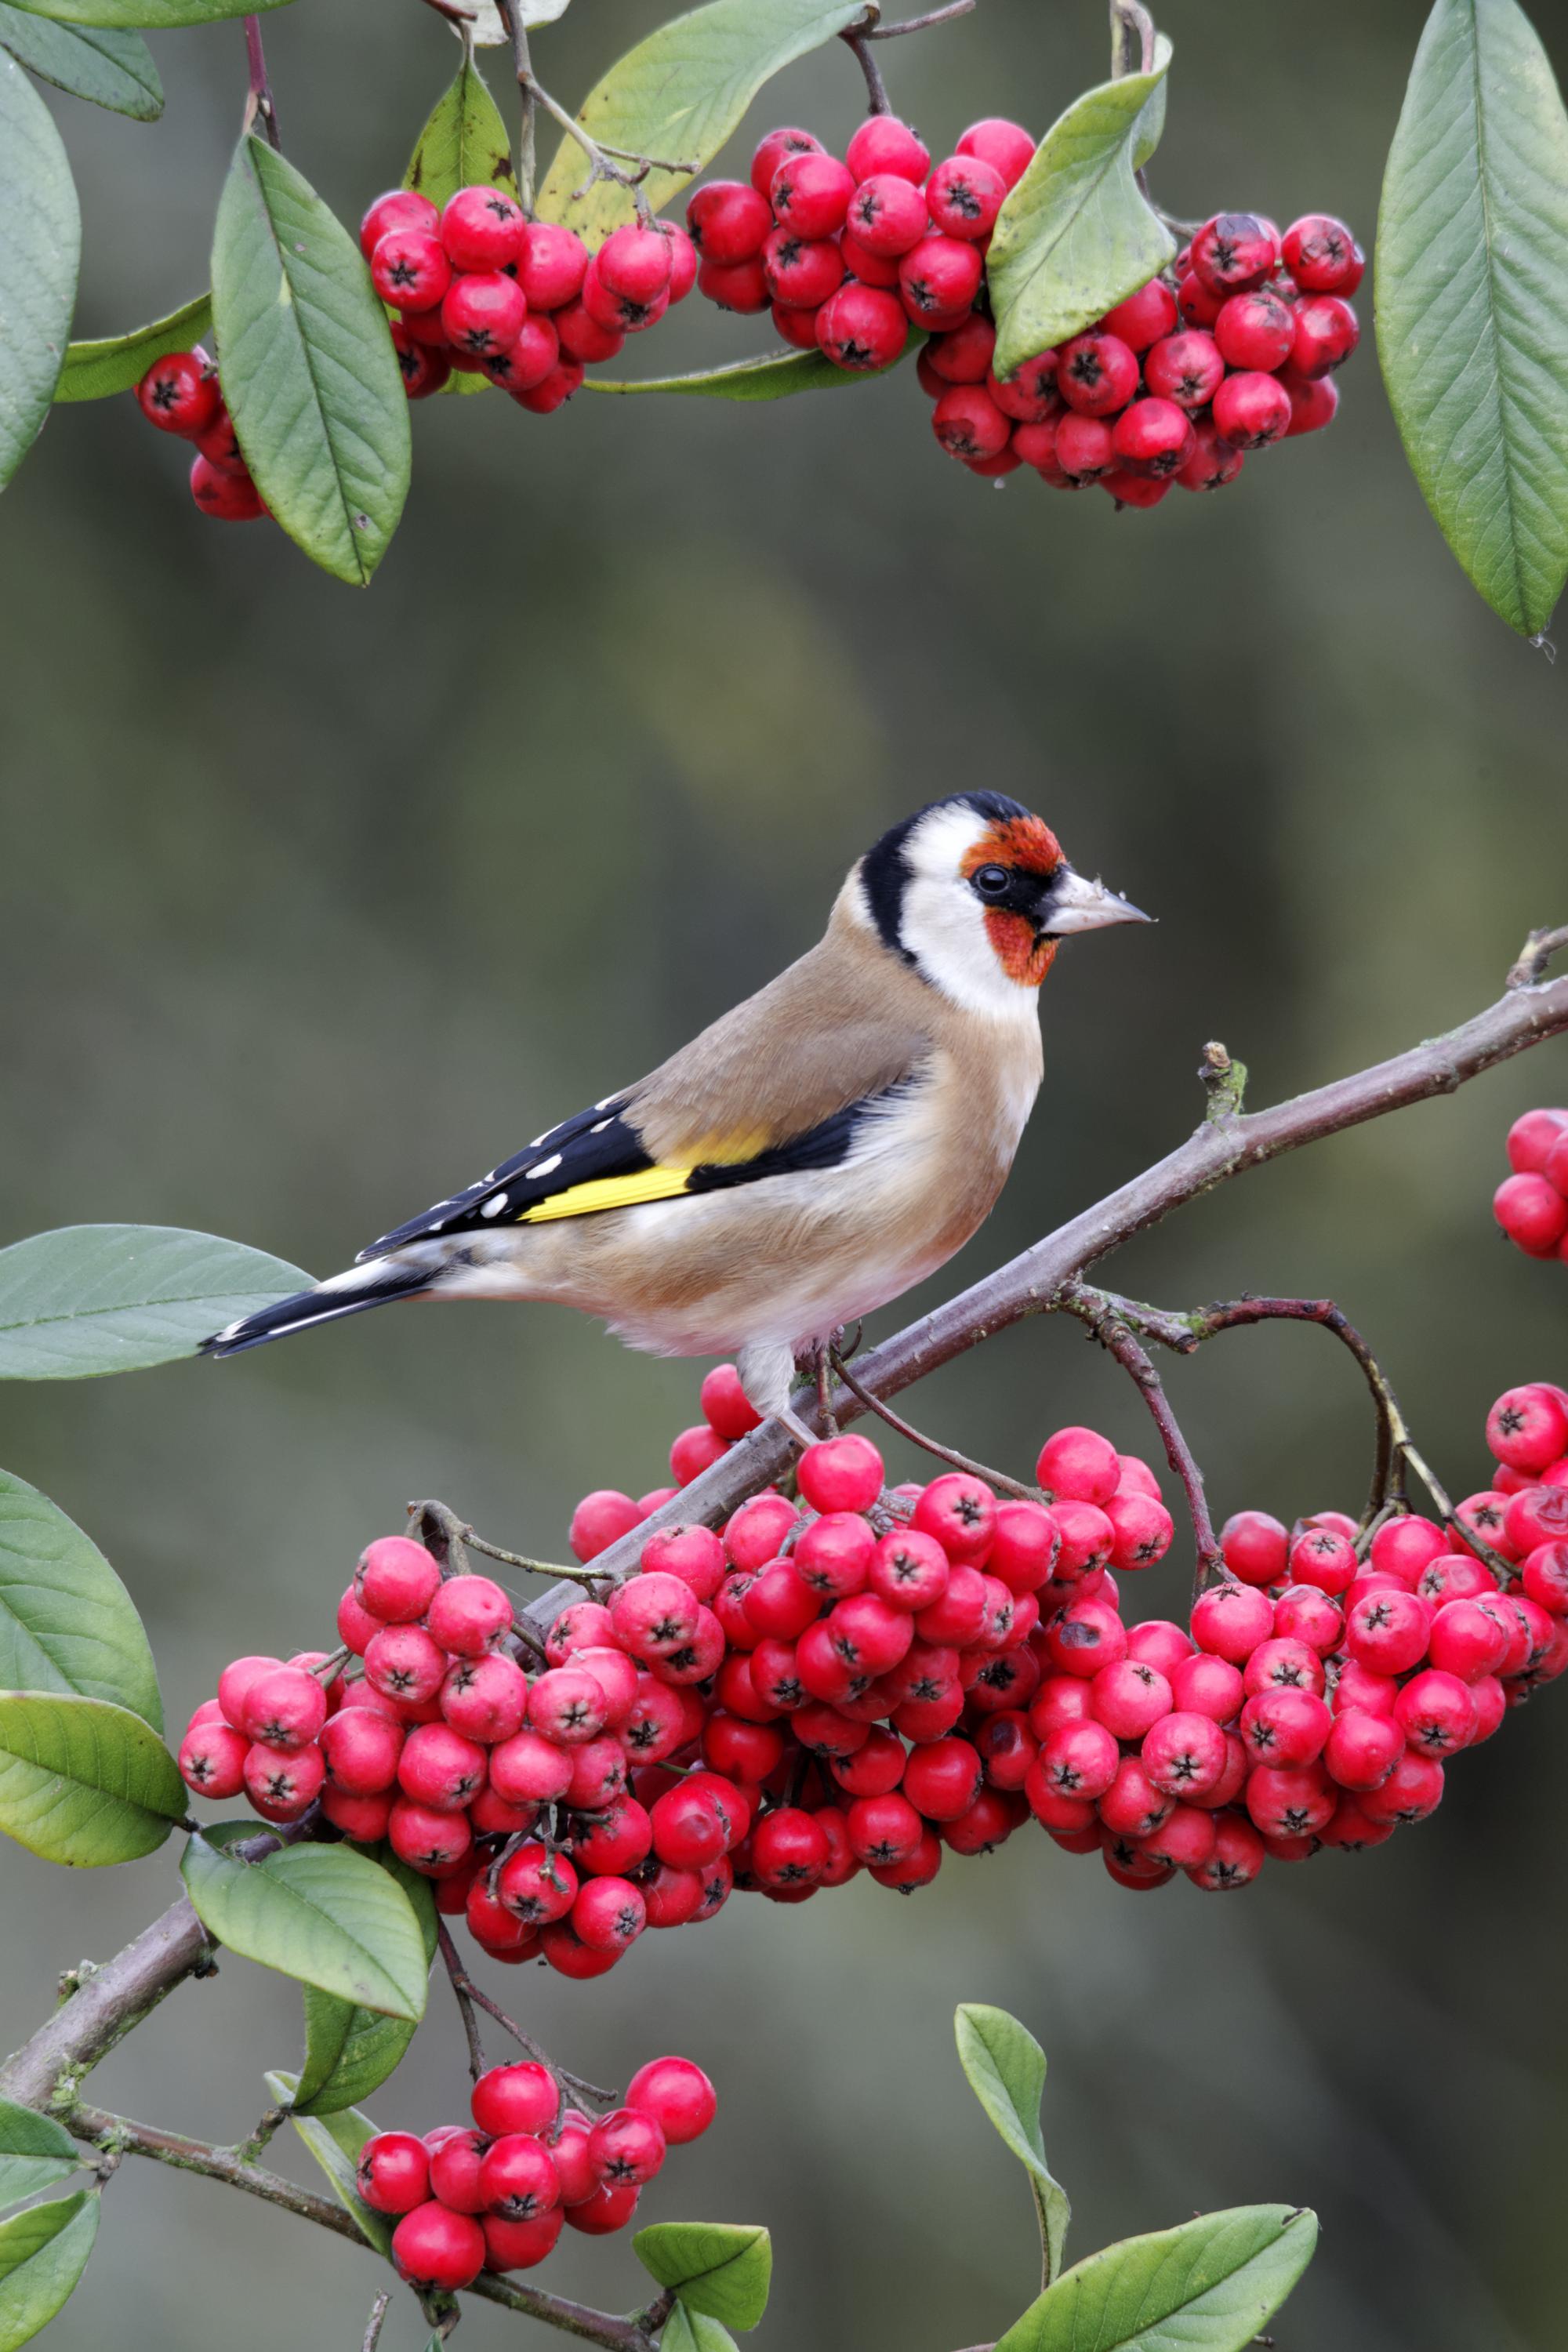 Goldfinch, Carduelis carduelis, single bird on red berries - Shutterstock credit